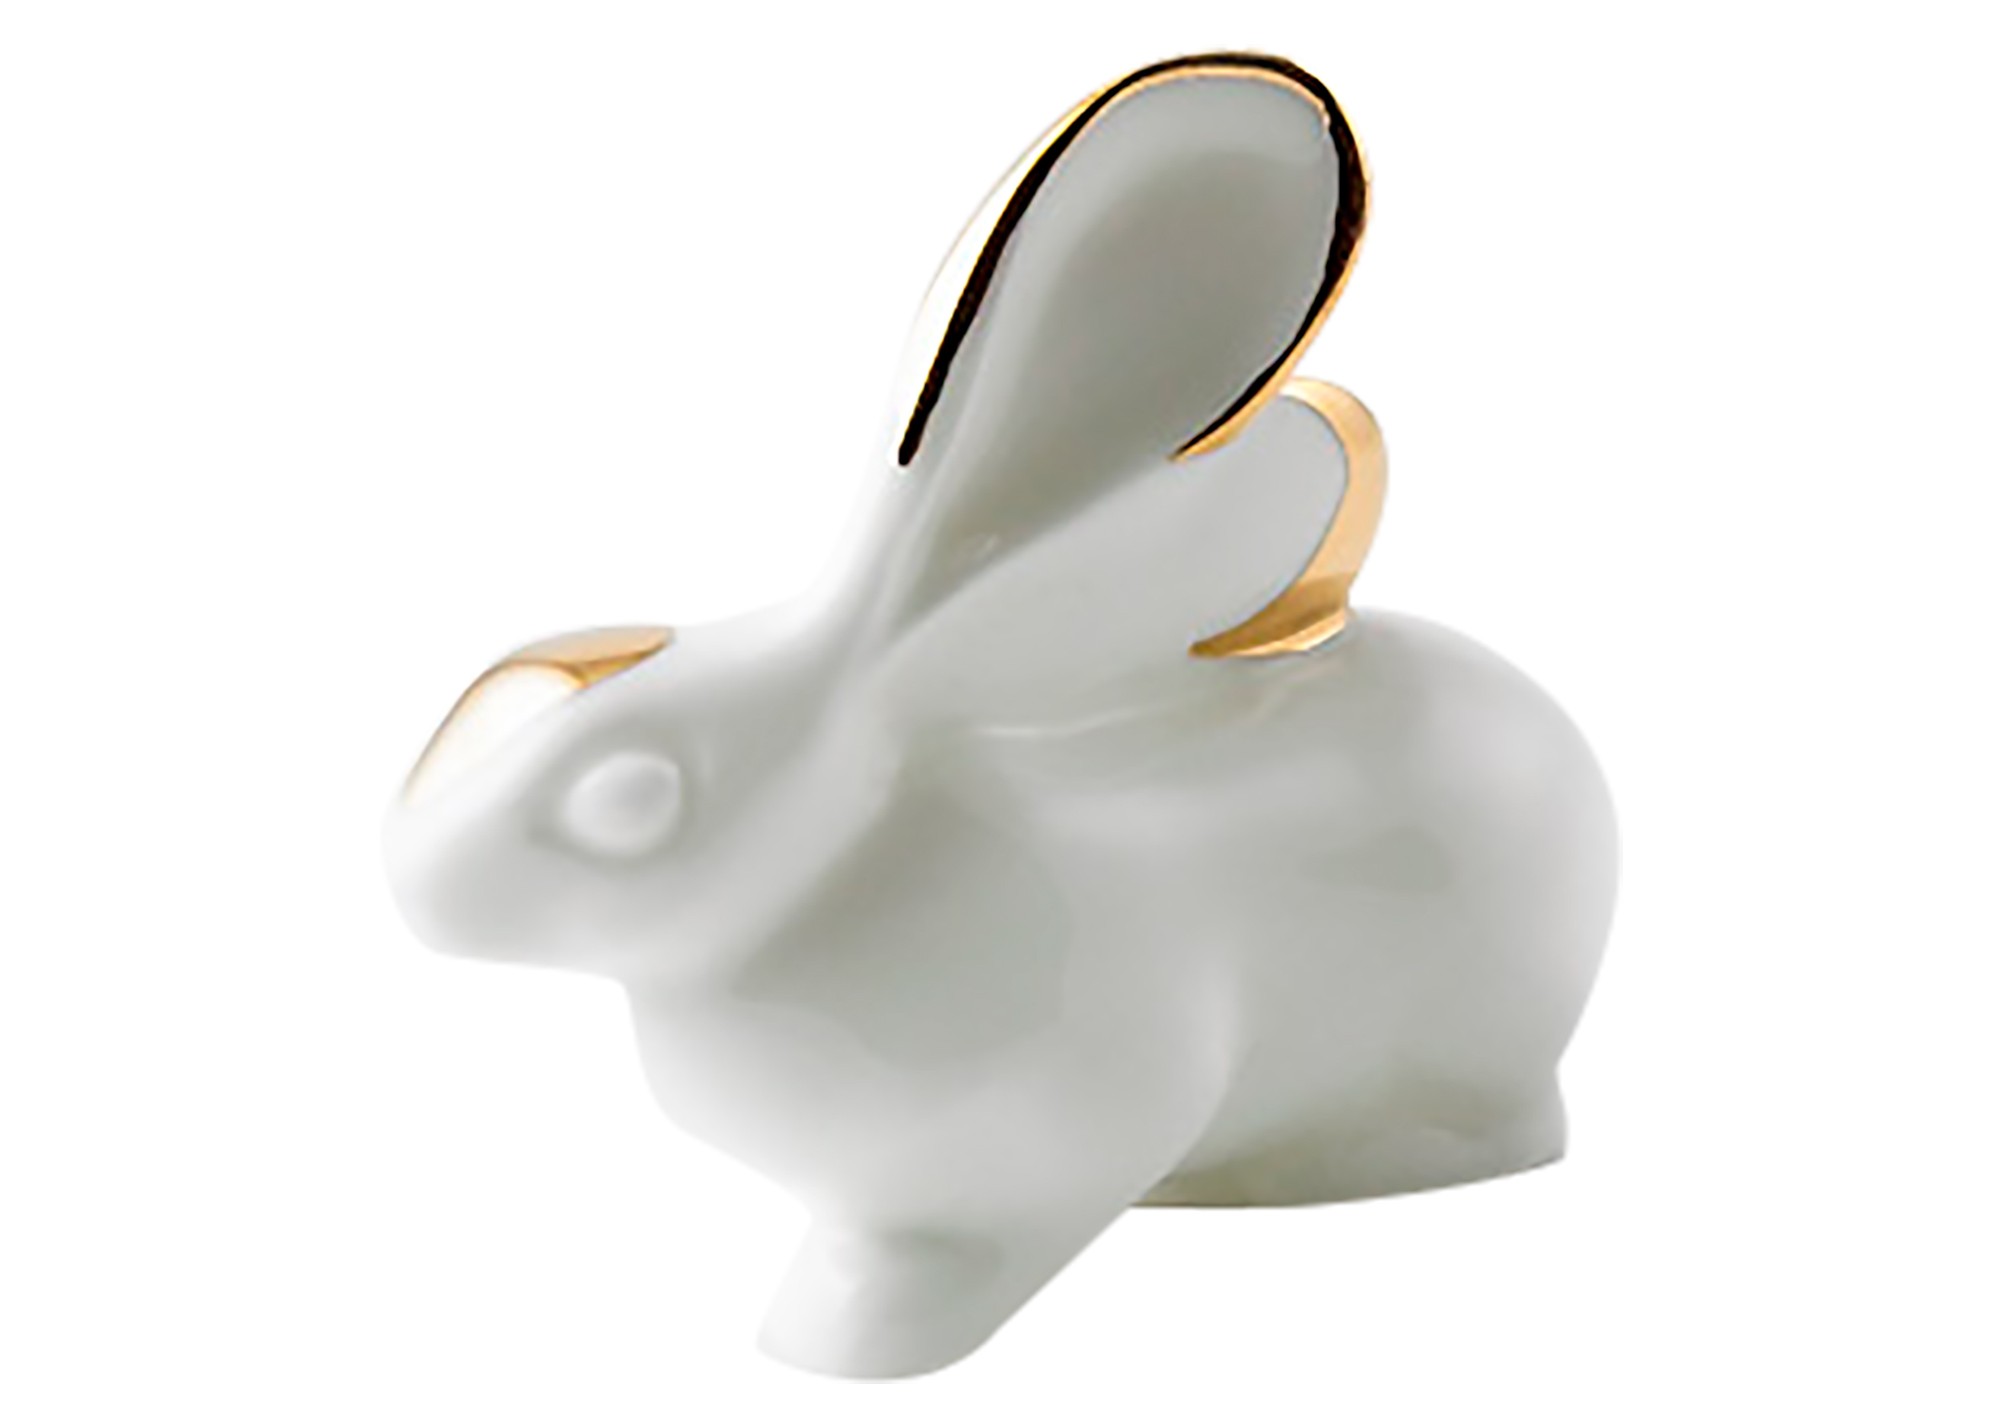 Buy Chinese Zodiac Year of the Rabbit 2023 at GoldenCockerel.com